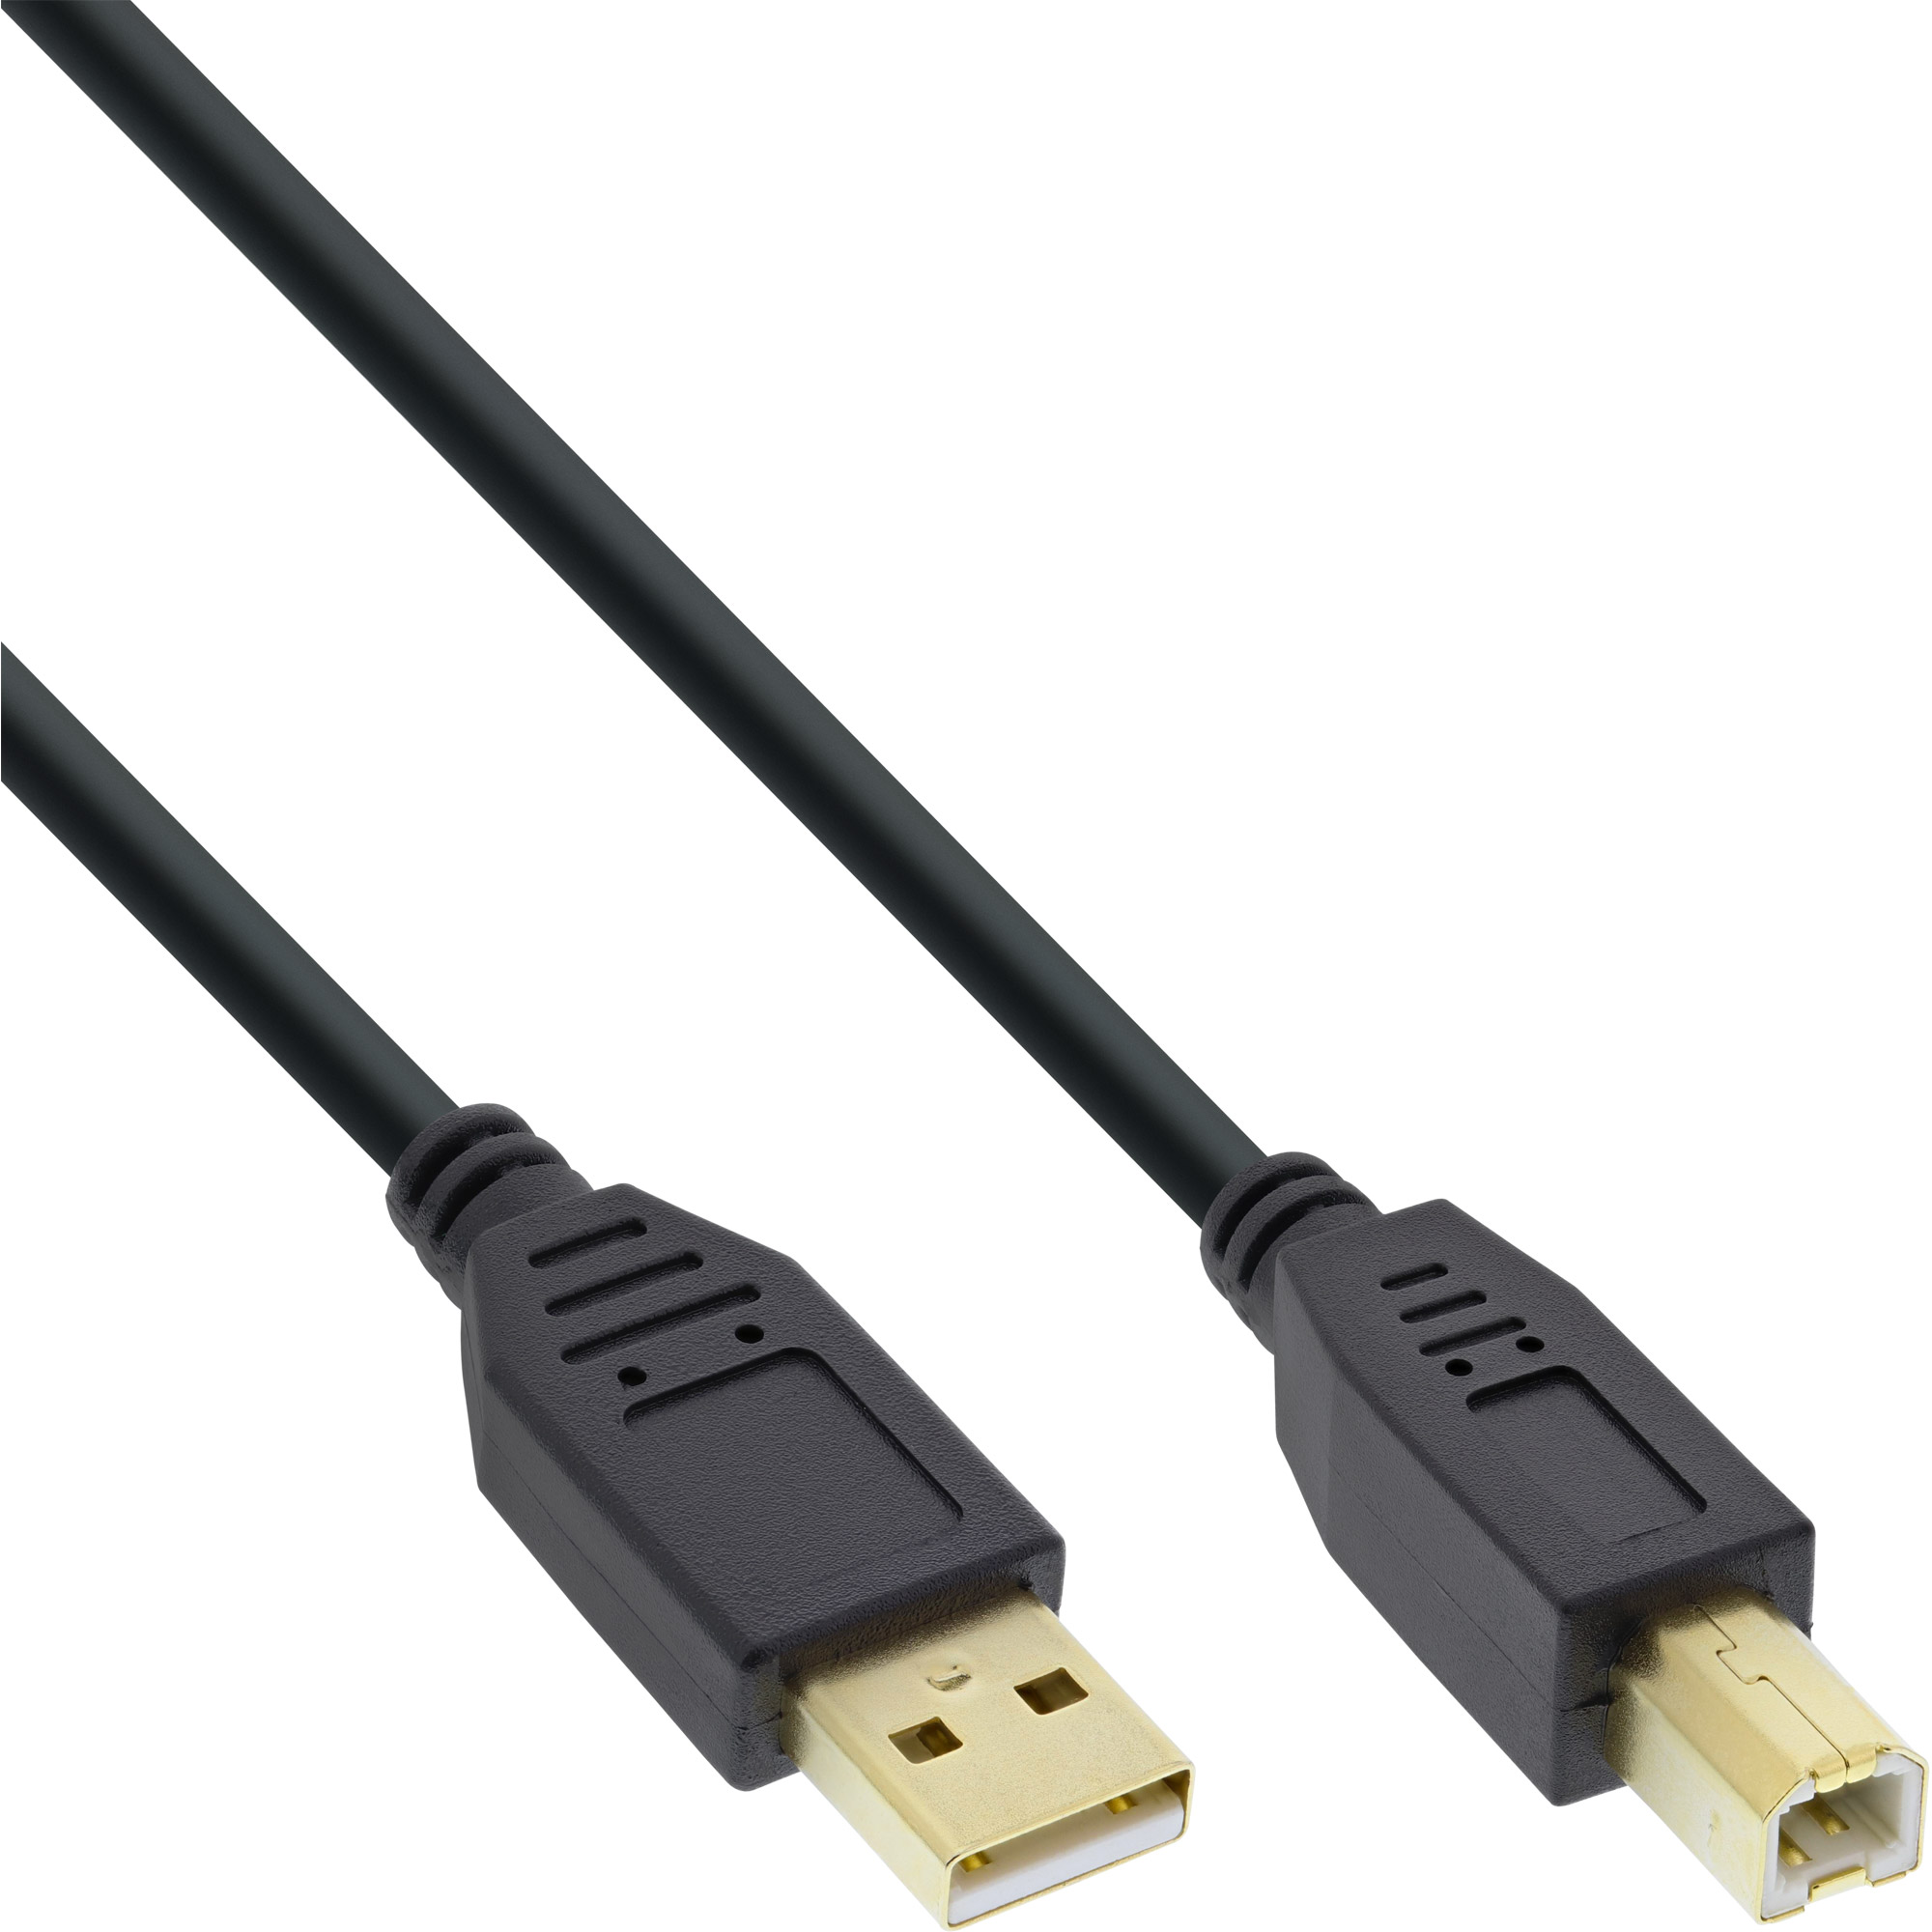 InLine® USB 2.0 Kabel, A an B, schwarz, Kontakte gold, 3m